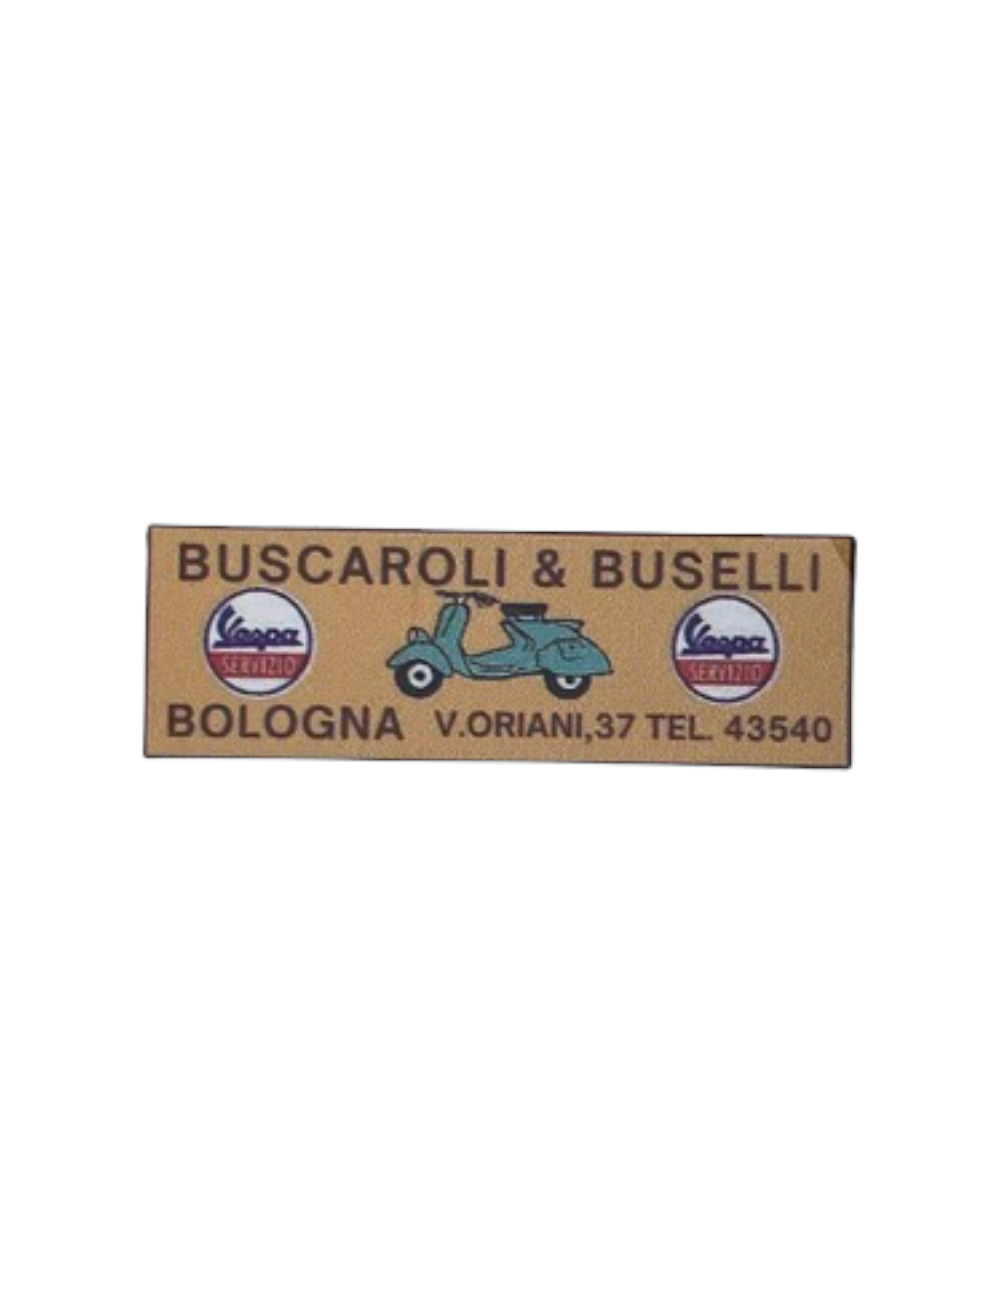 Adesivo concessionario Buscaroli & Buselli - Bologna